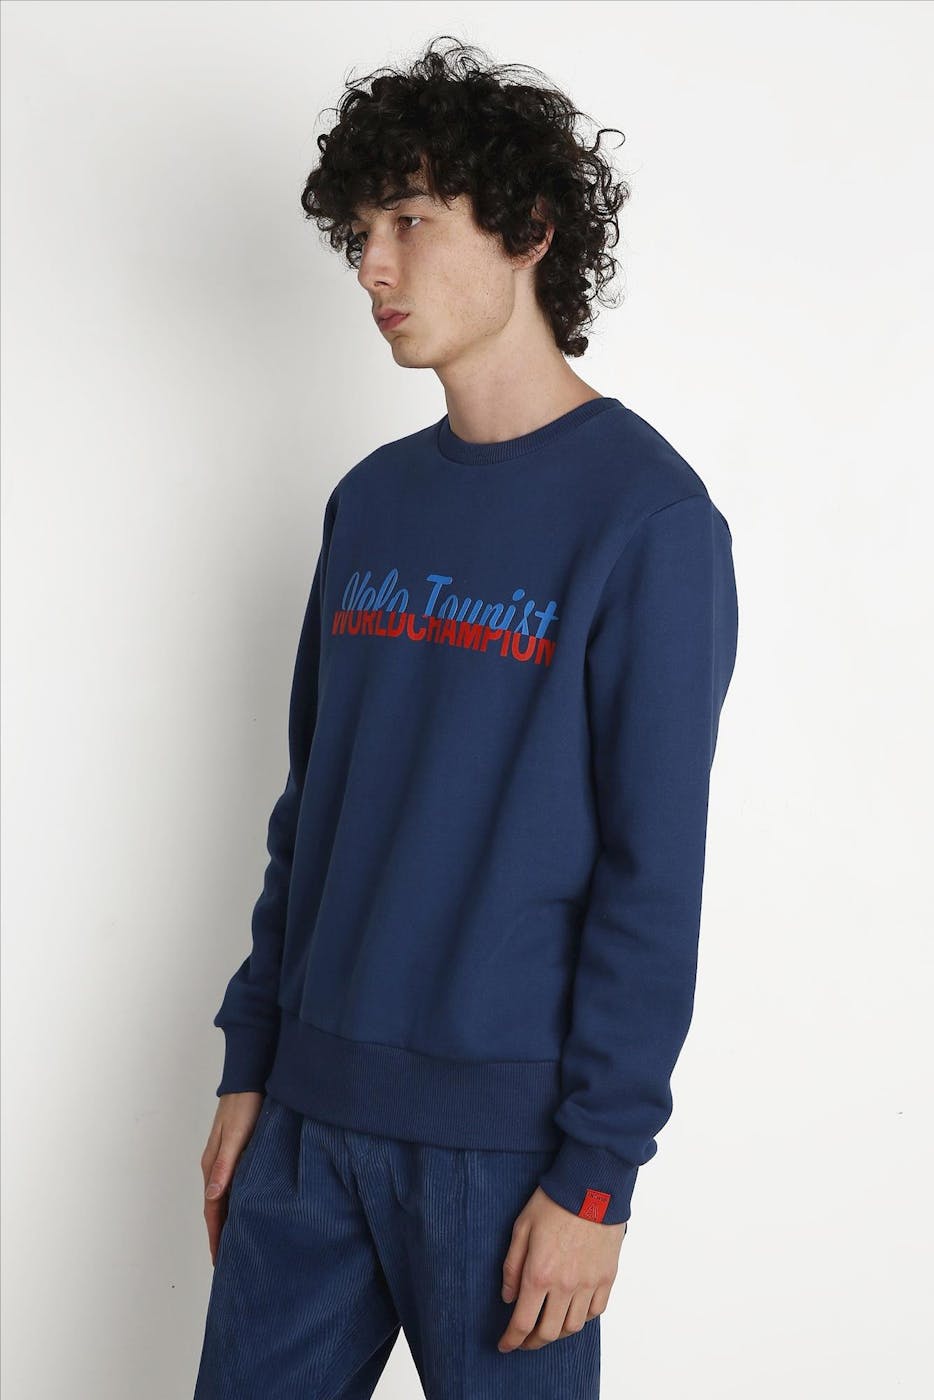 Antwrp - Donkerblauwe Worldchampion sweater